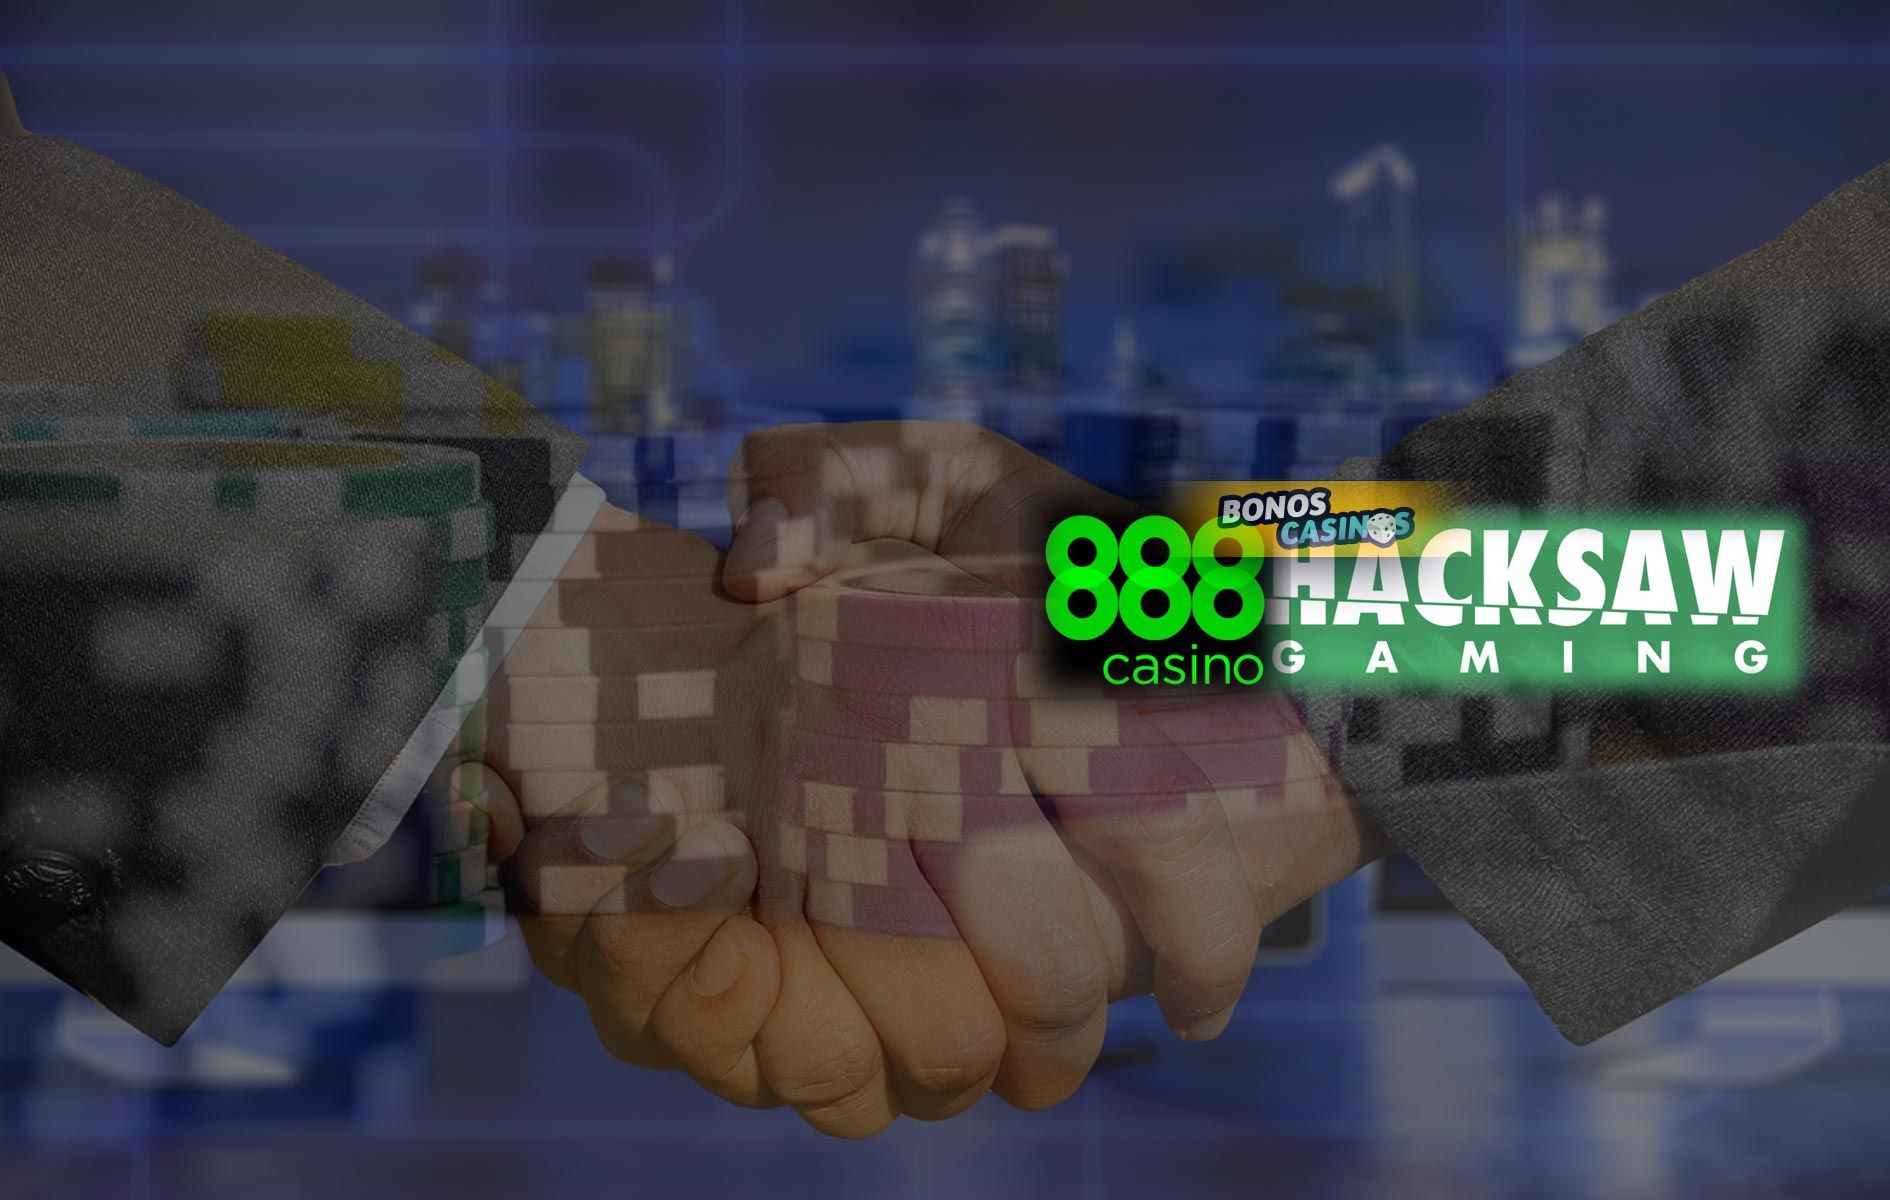 logo de 888casino se asocia con Hacksaw Gaming